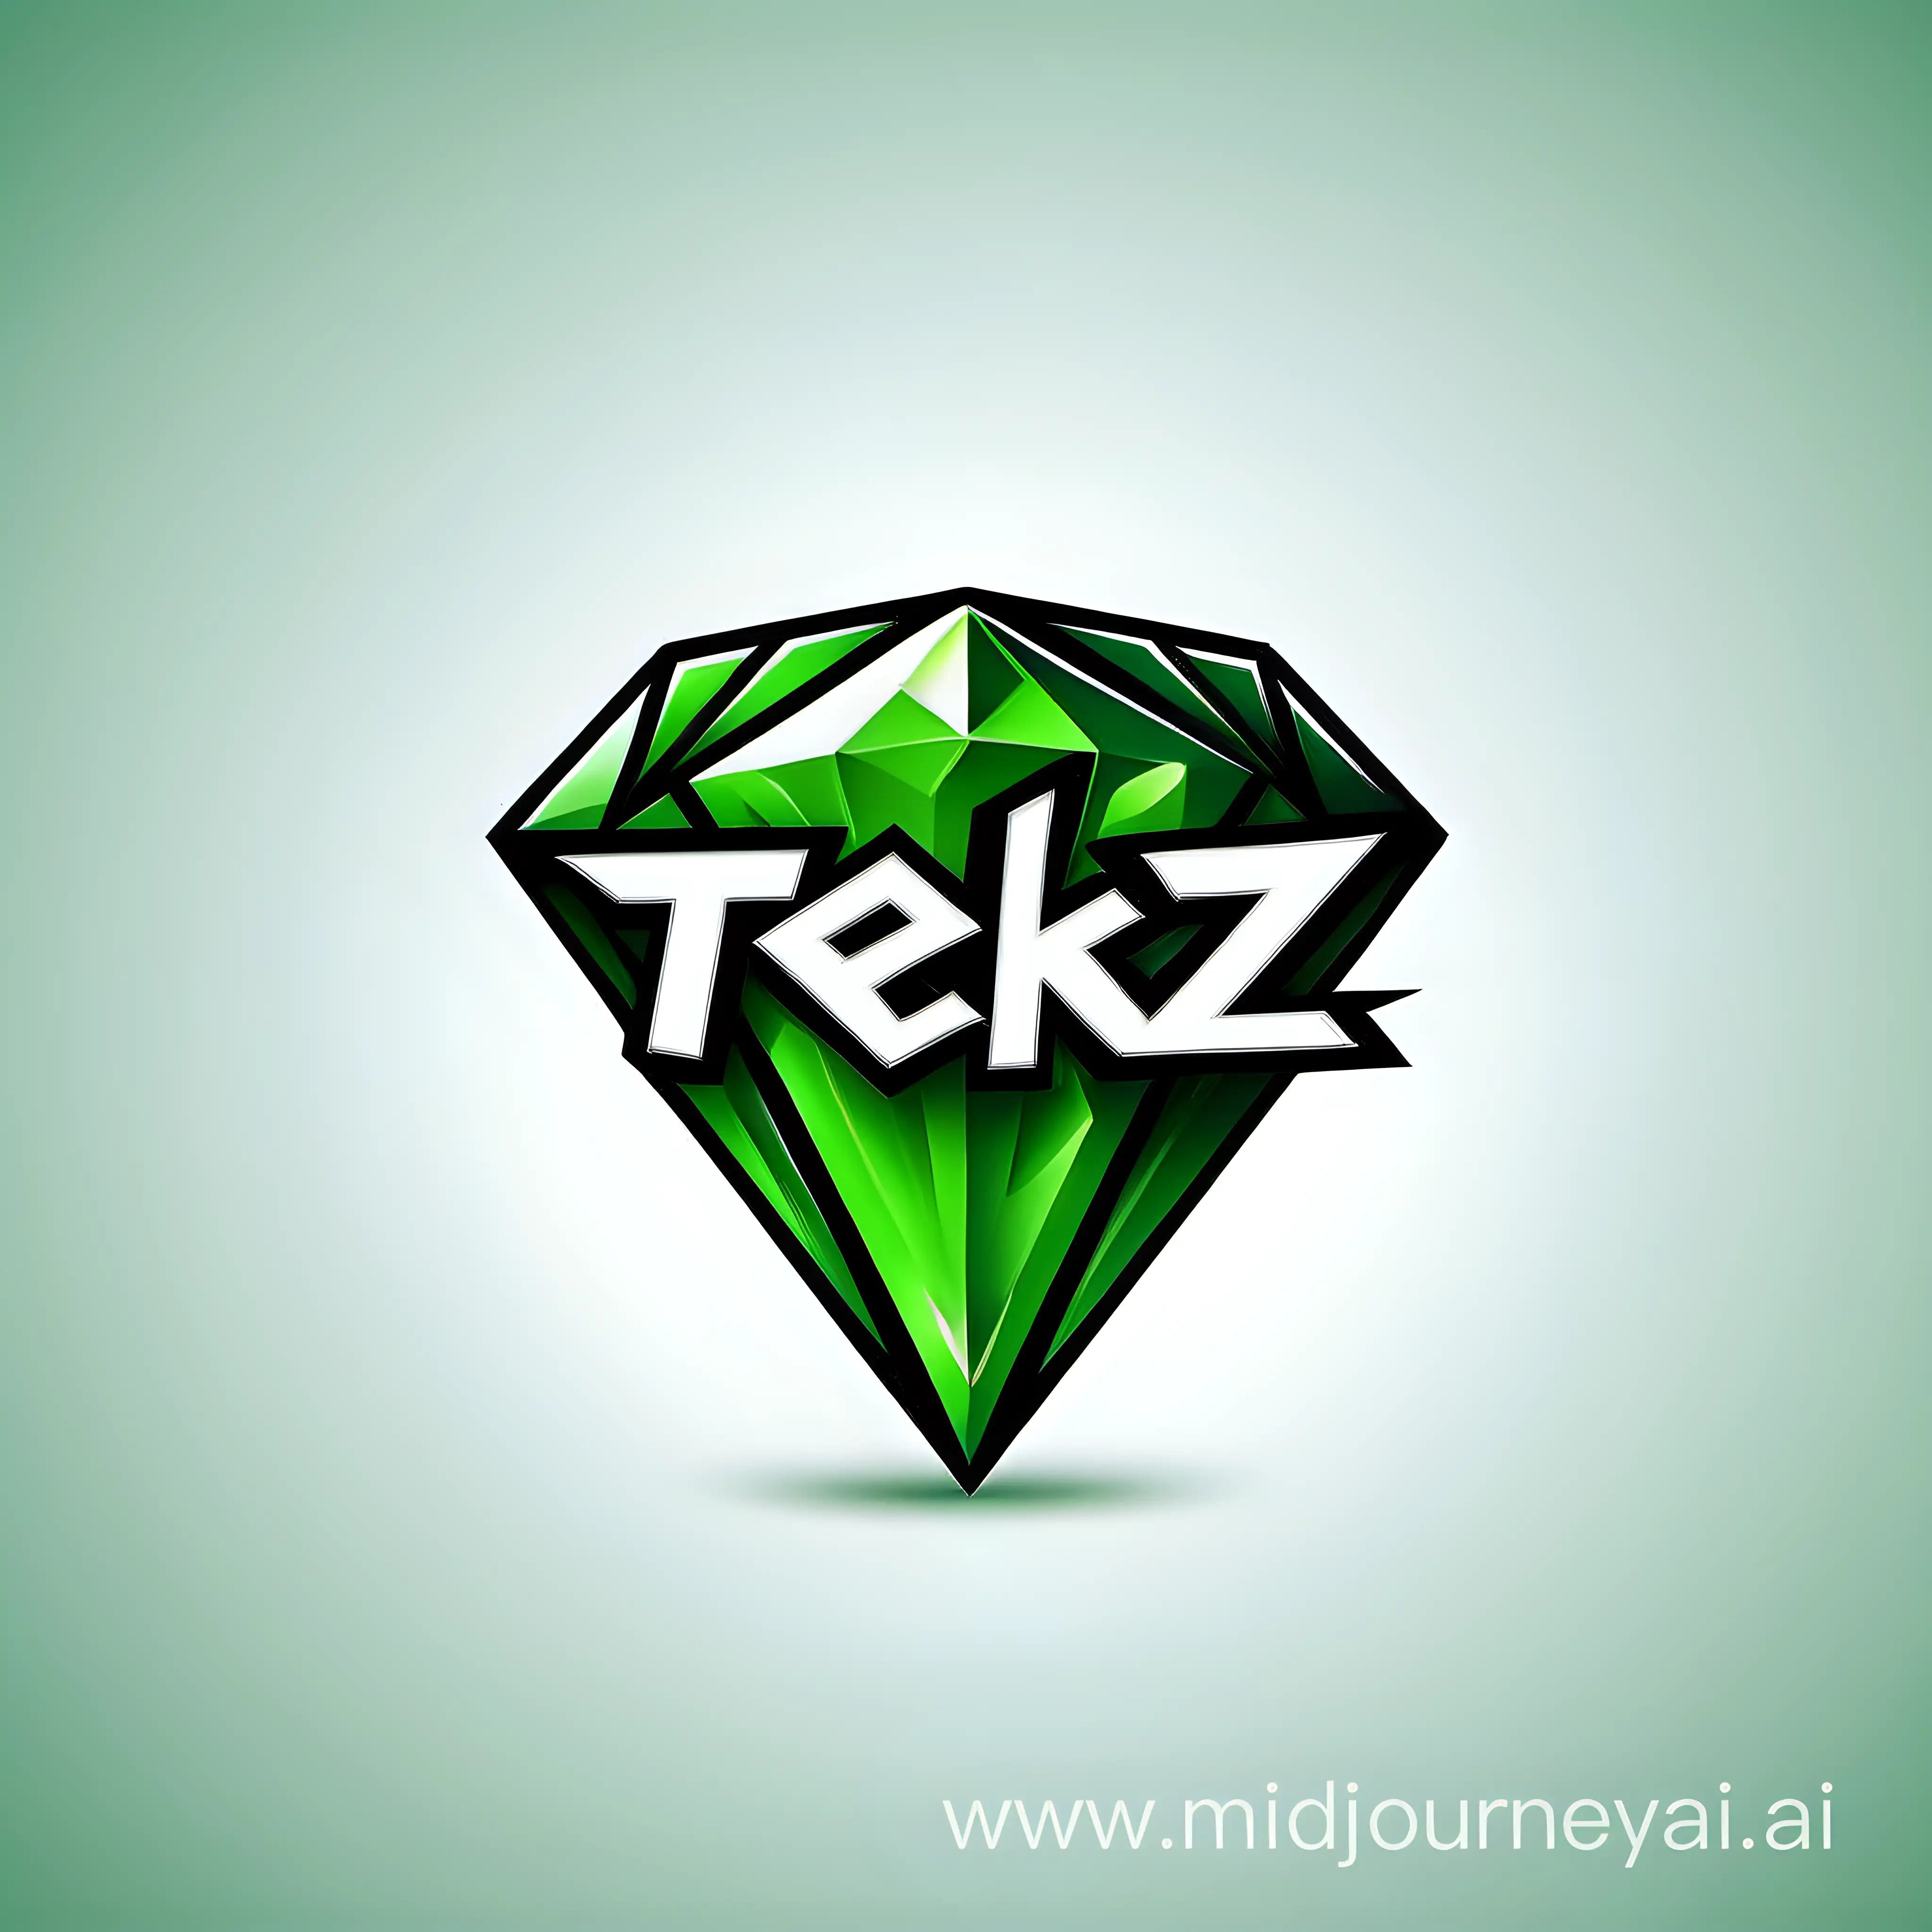 Green Diamond Logo Featuring TEKZ with Groot